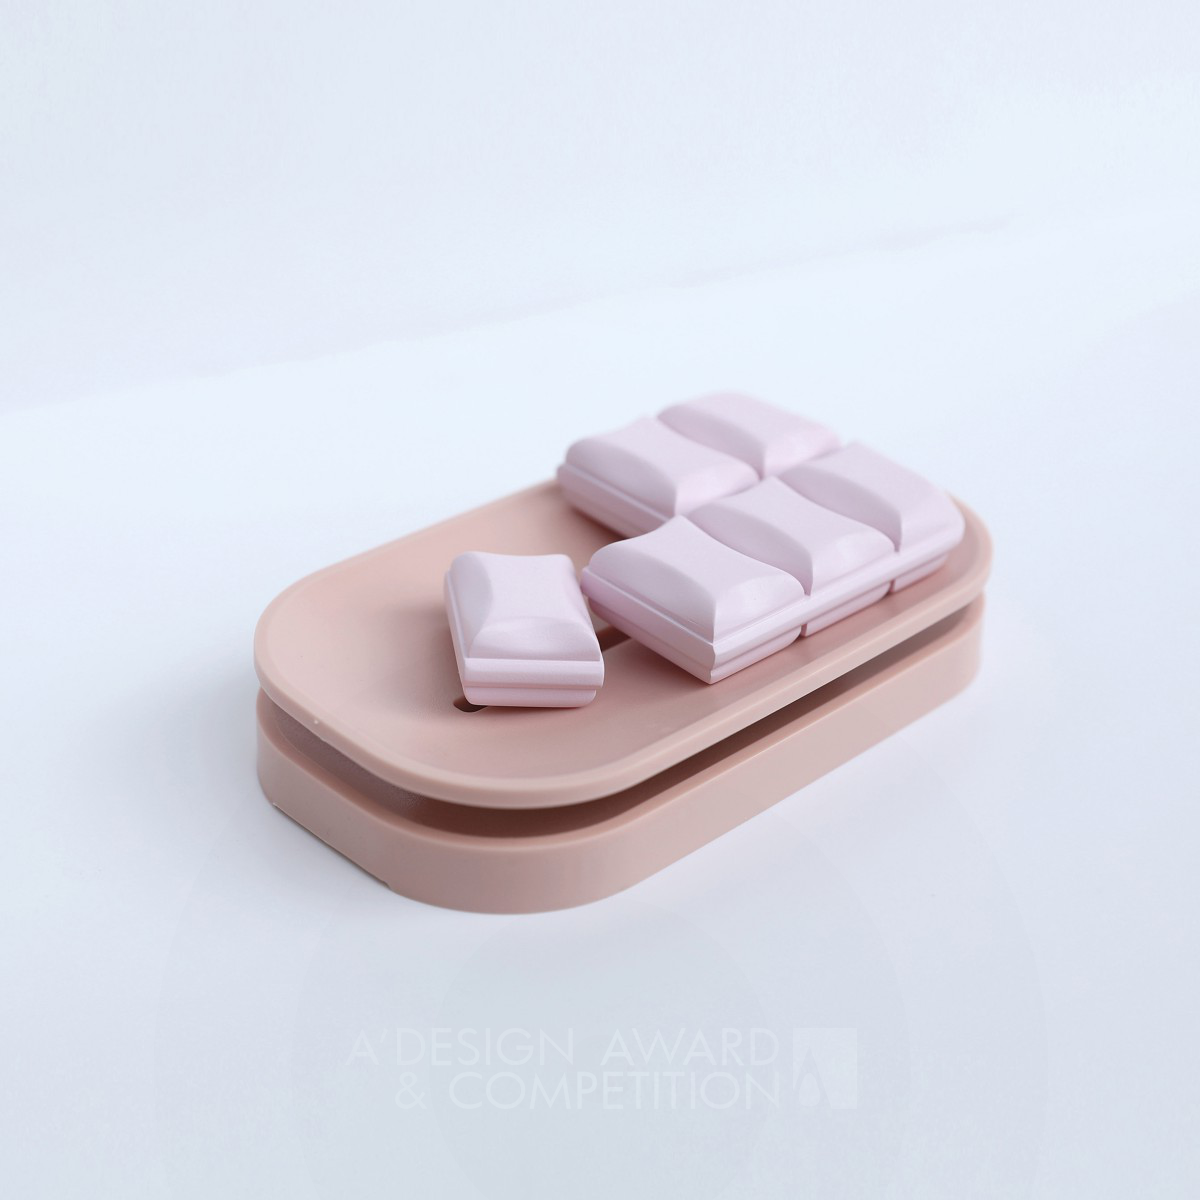 Quantitative Soap by WeiCheng Deng